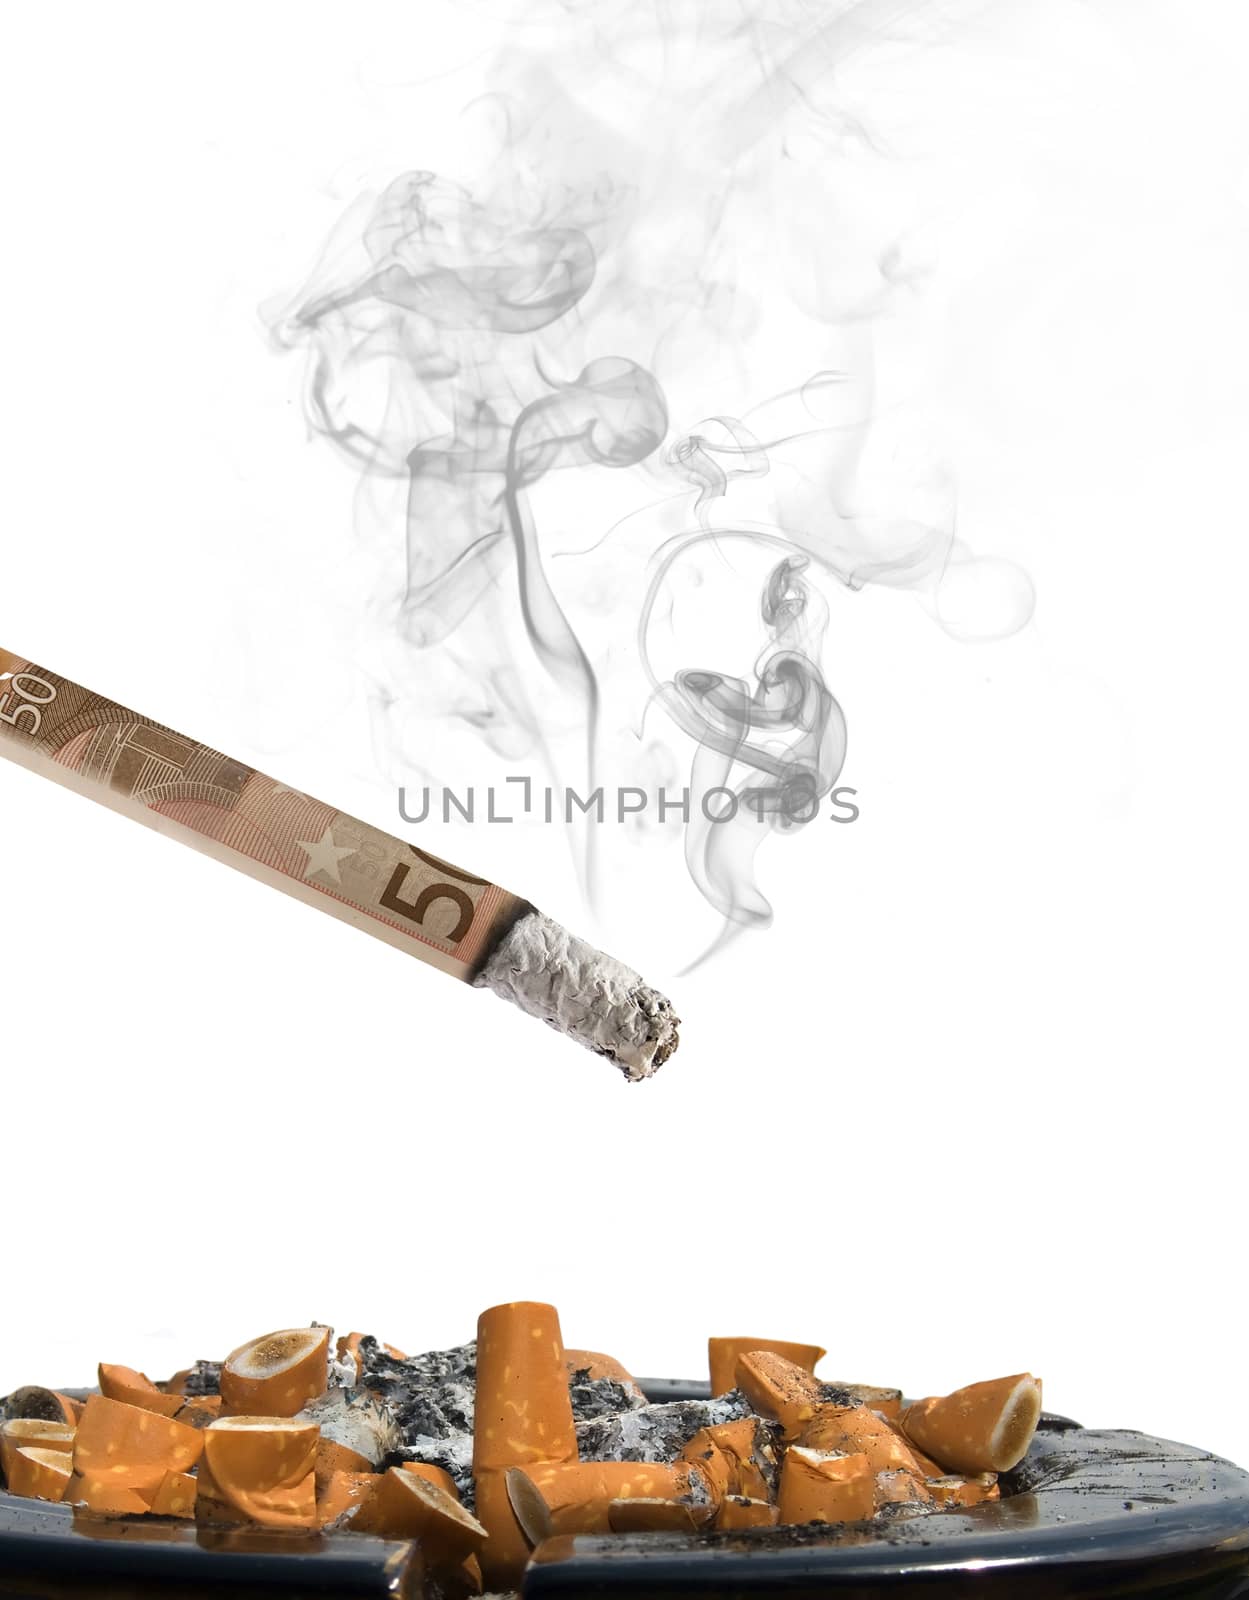 50 euro cigarette with ashtray and smoke on white background